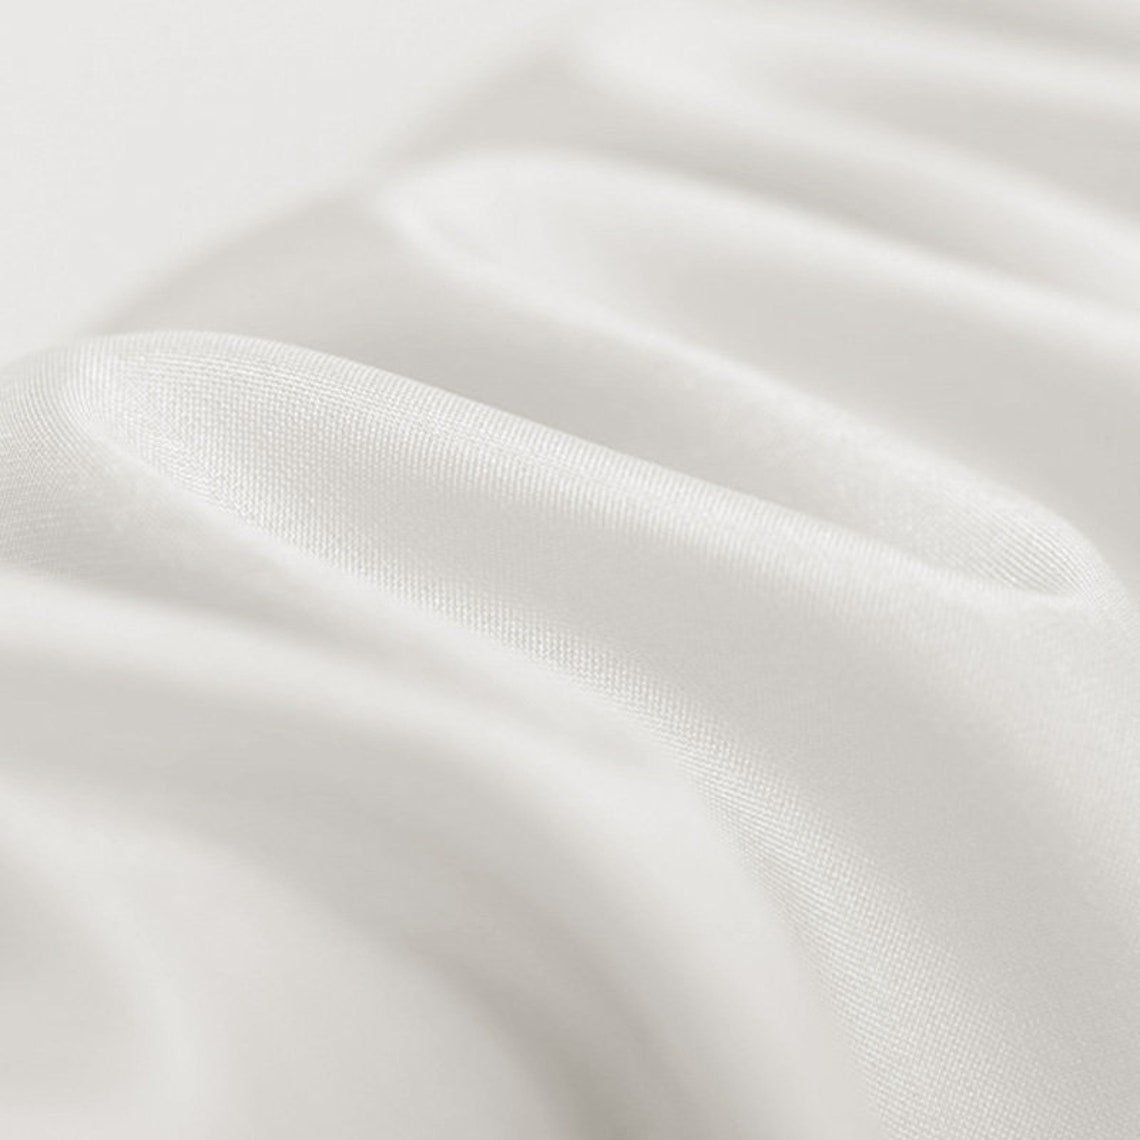 100% silk 10mm silk habotai fabric ivory white color 114cm | Etsy